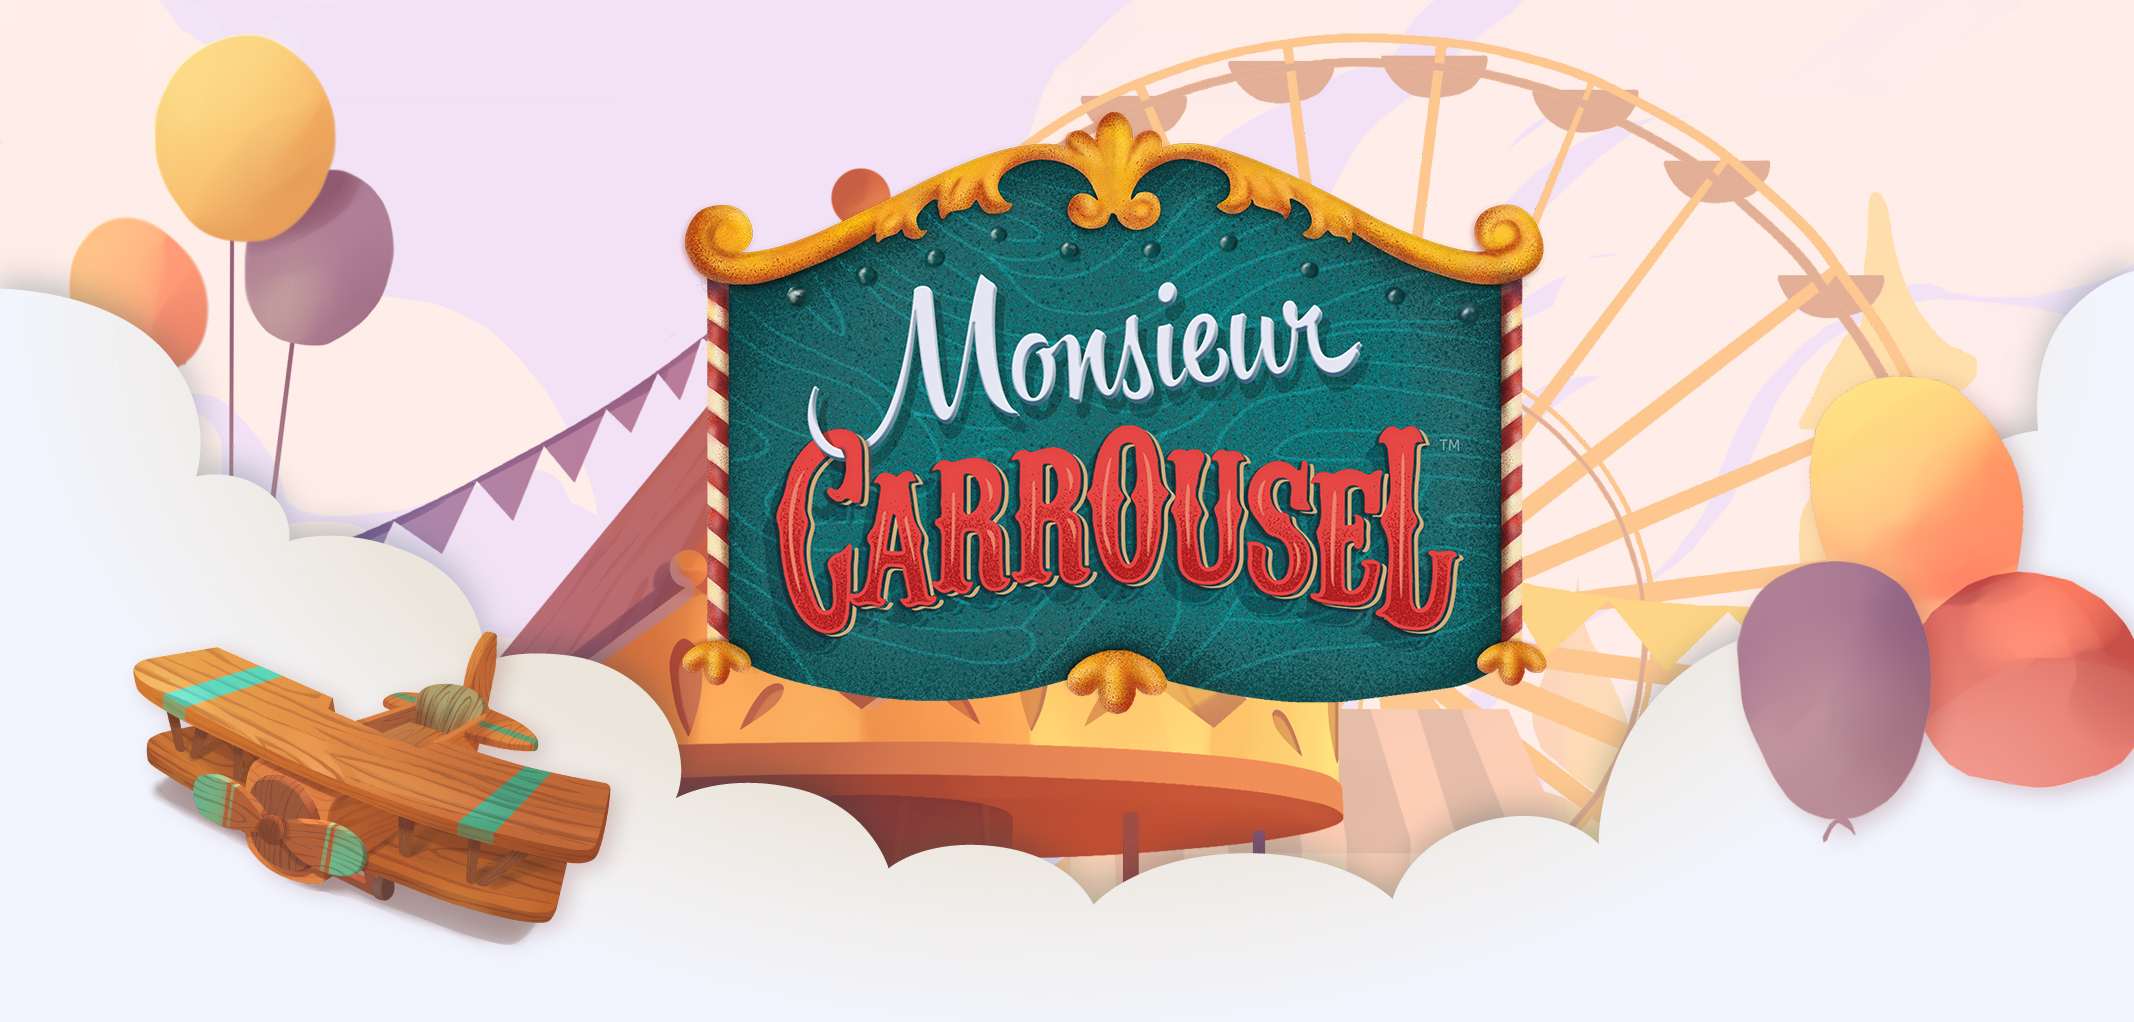 Monsieur Carrousel